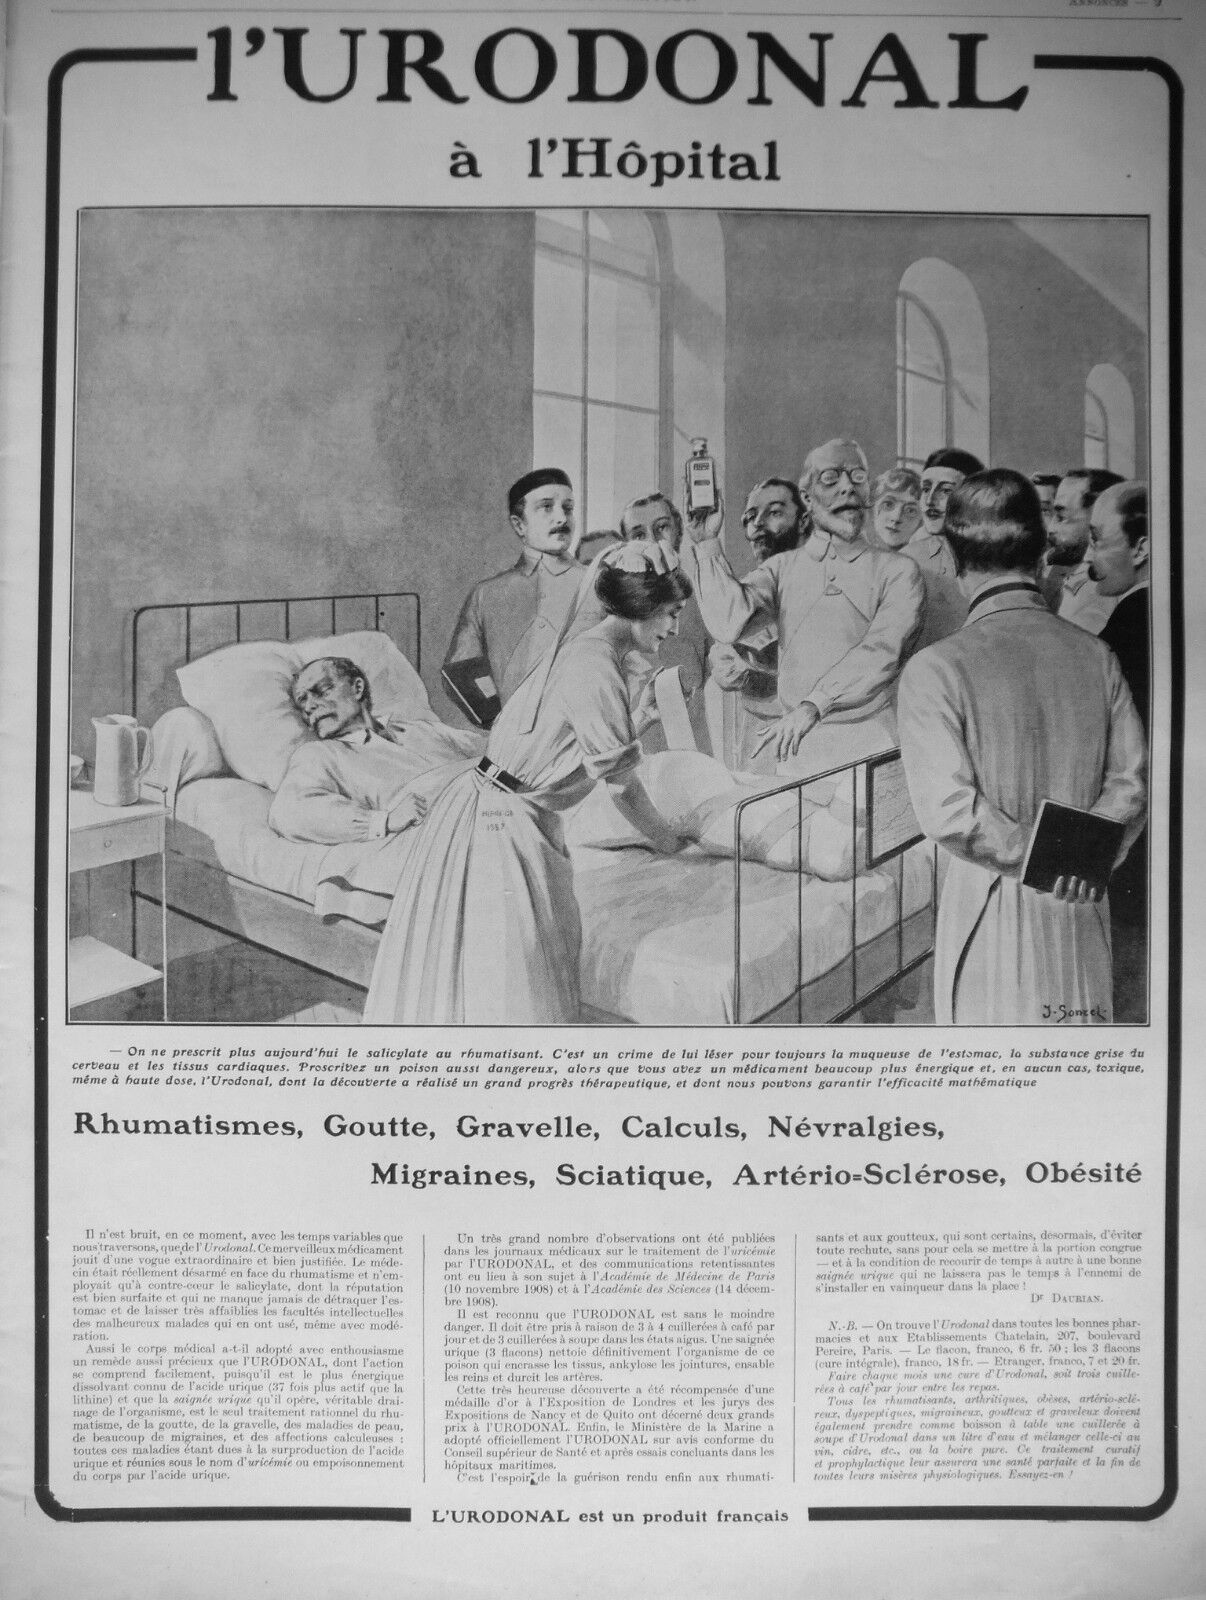 AD PRINT Original 1913 URODONAL at the hospital for migraine rheumatism obesity